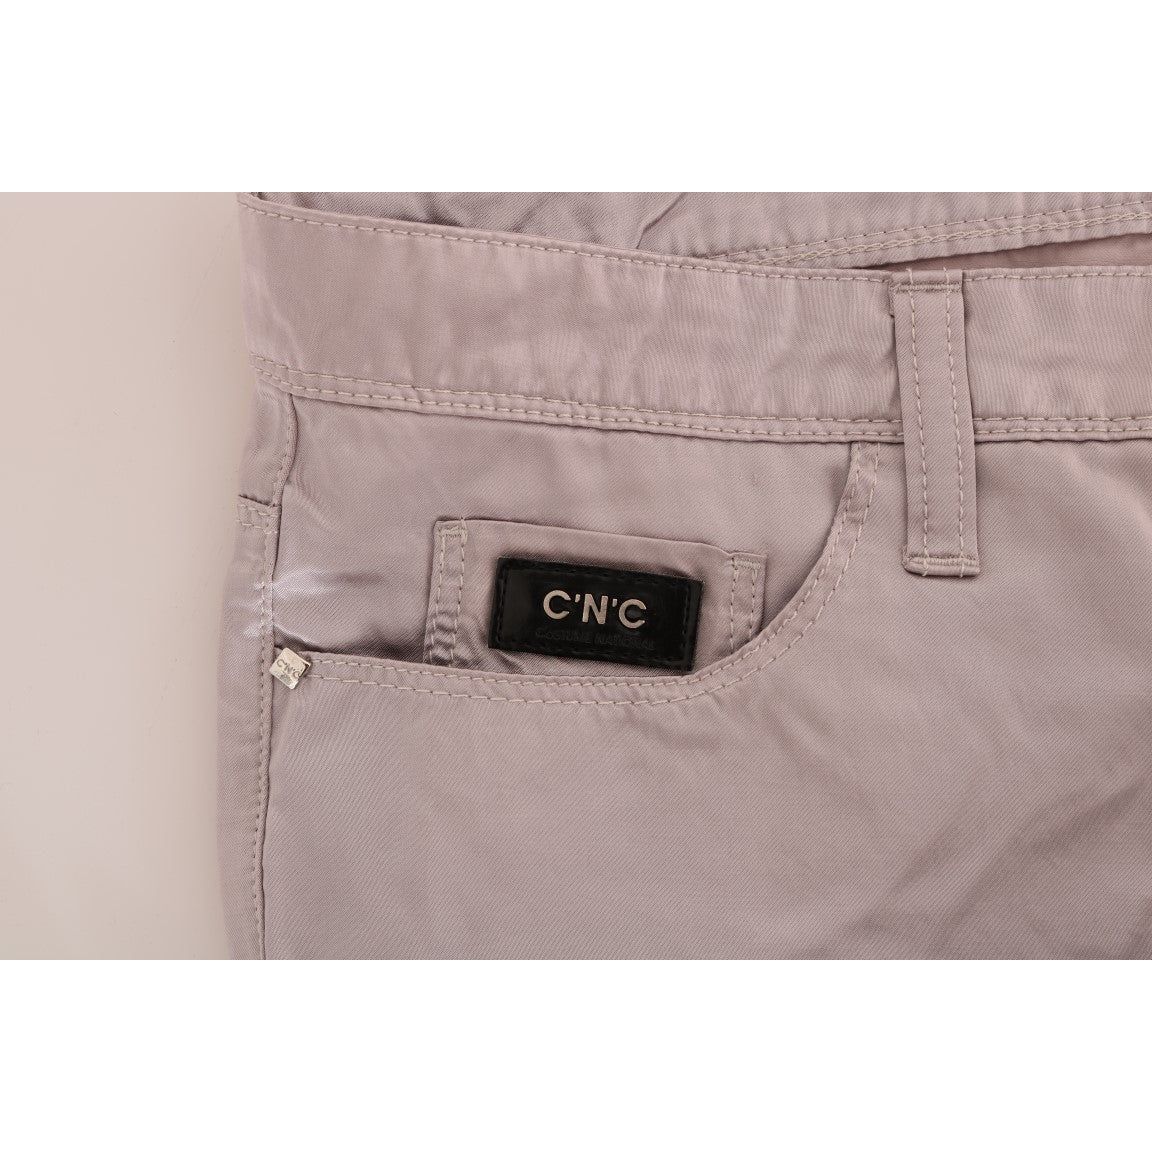 Costume National Chic Beige Slim Fit Designer Jeans Jeans & Pants beige-cotton-slim-fit-jeans